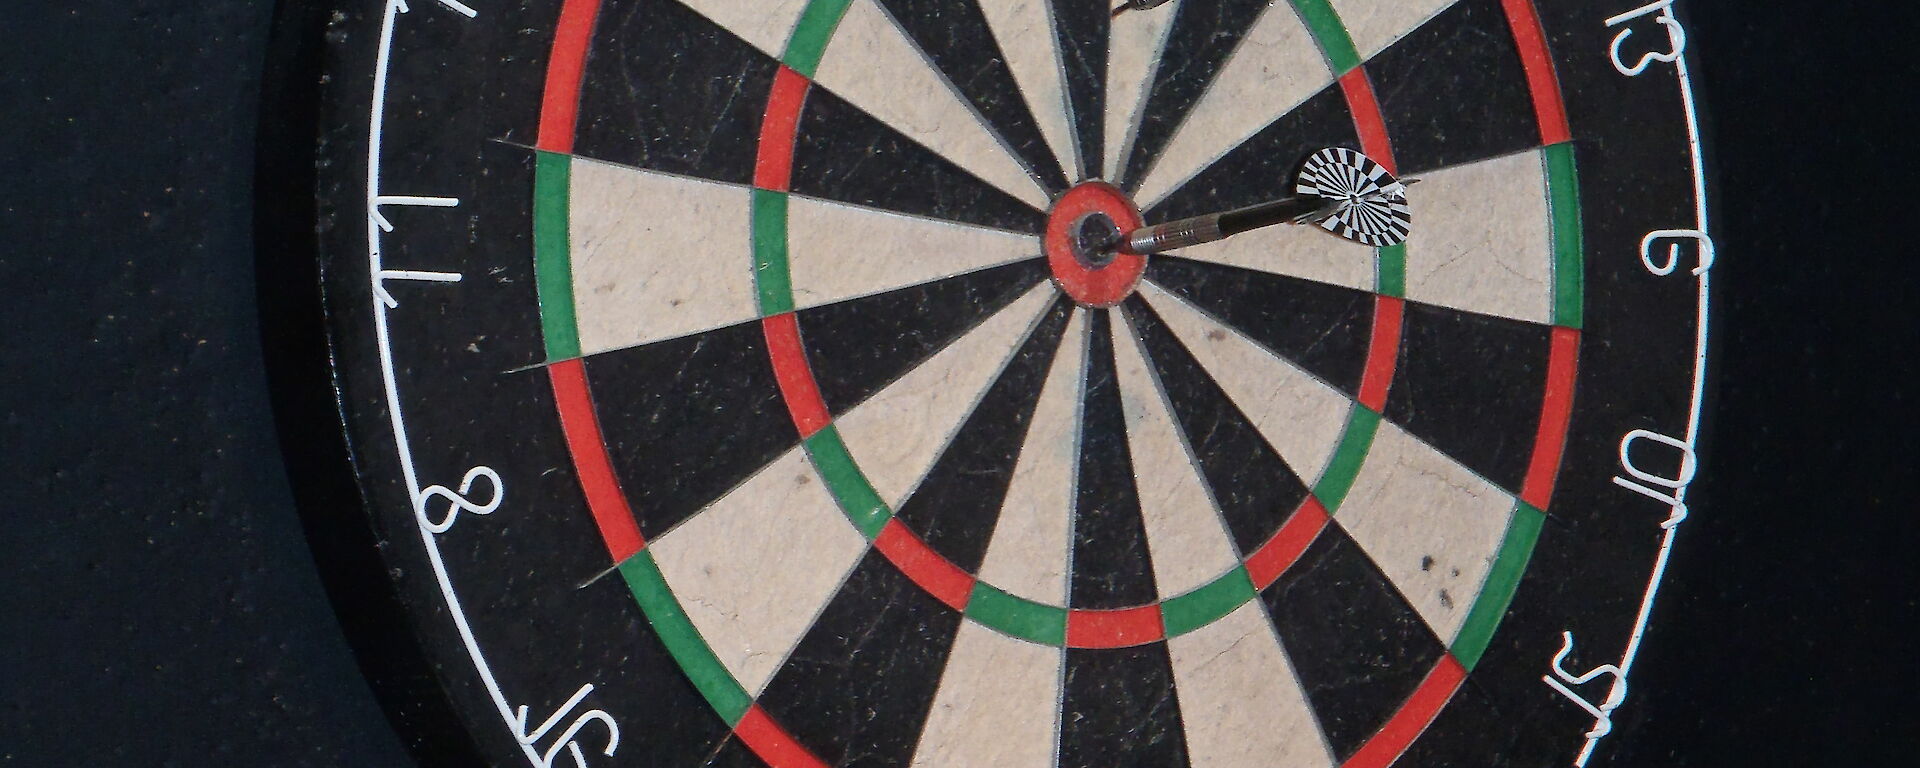 Dart board with dart in bullseye